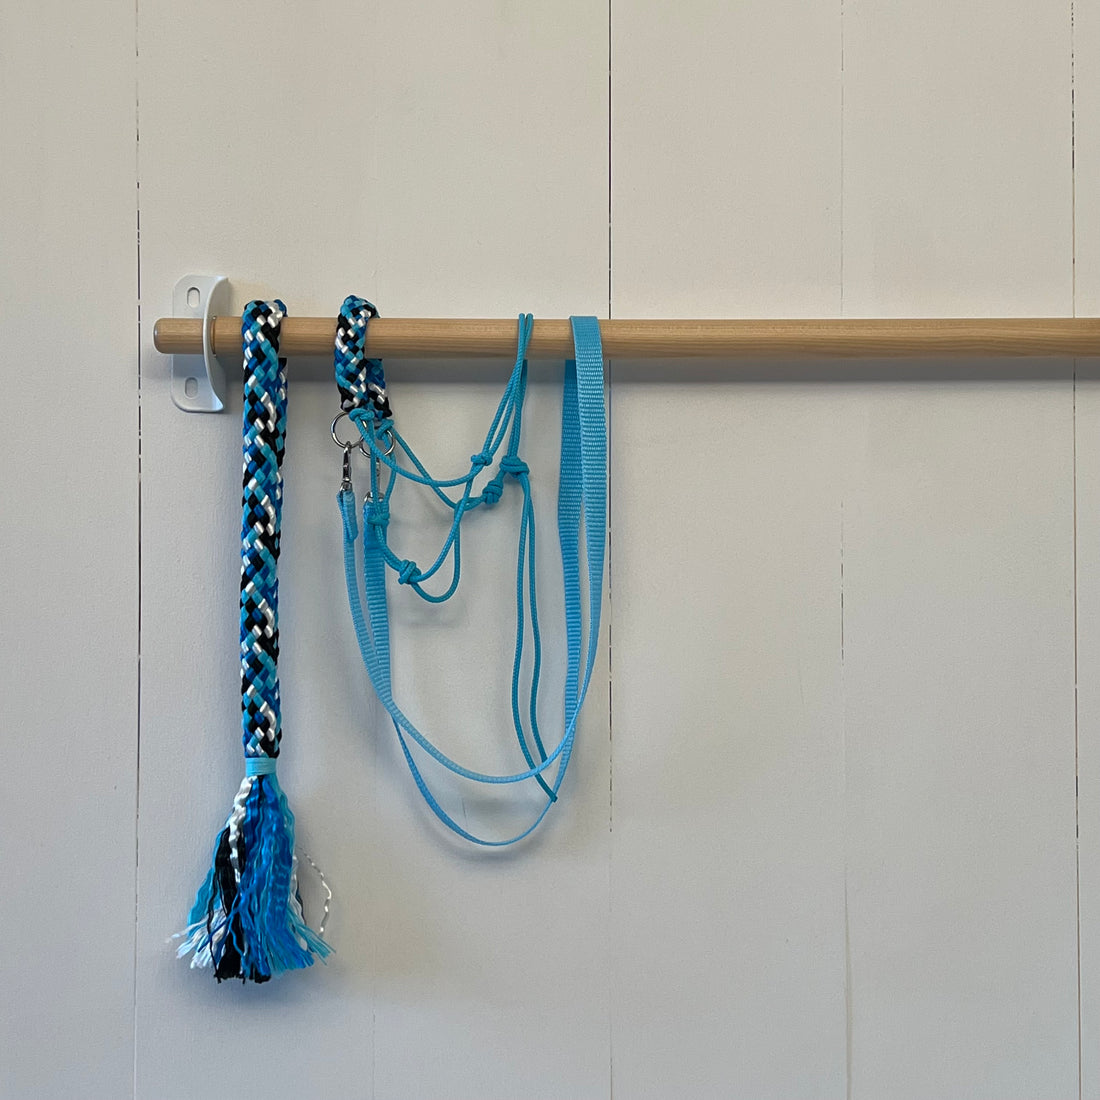 Rope set blue / black / white